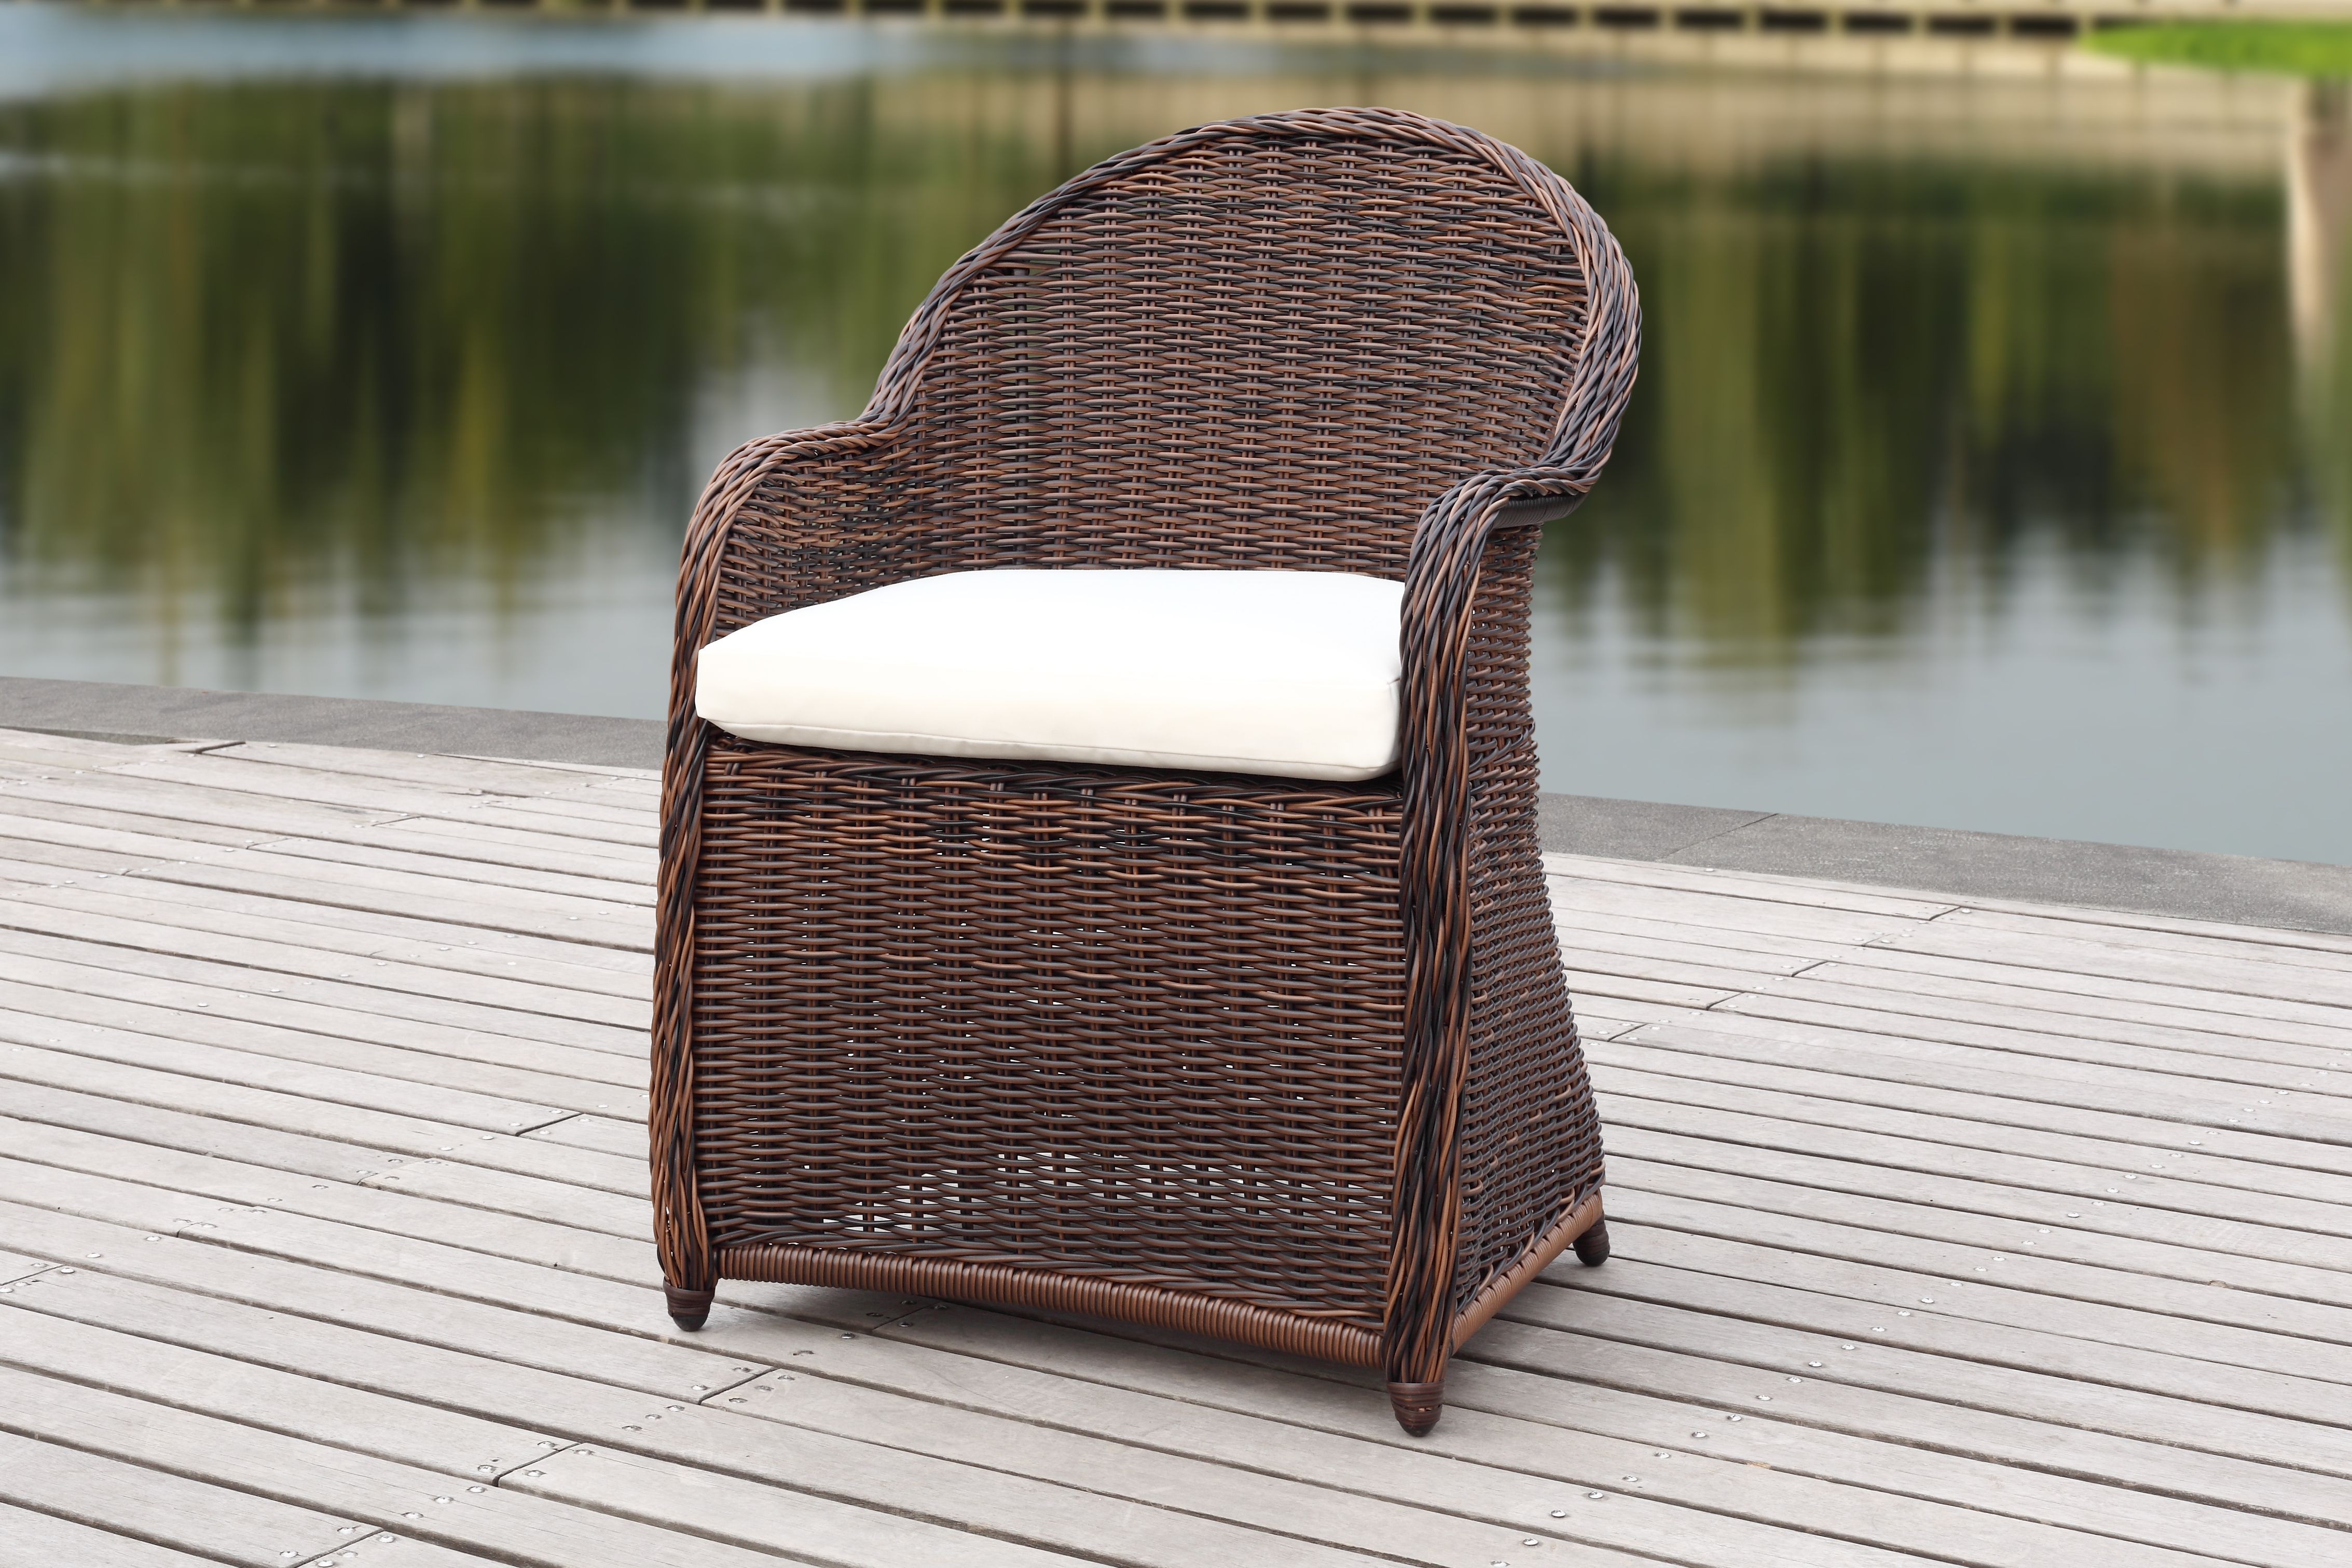 Newton Wicker Arm Chair With Cushion - Brown/Beige - Safavieh - Image 8